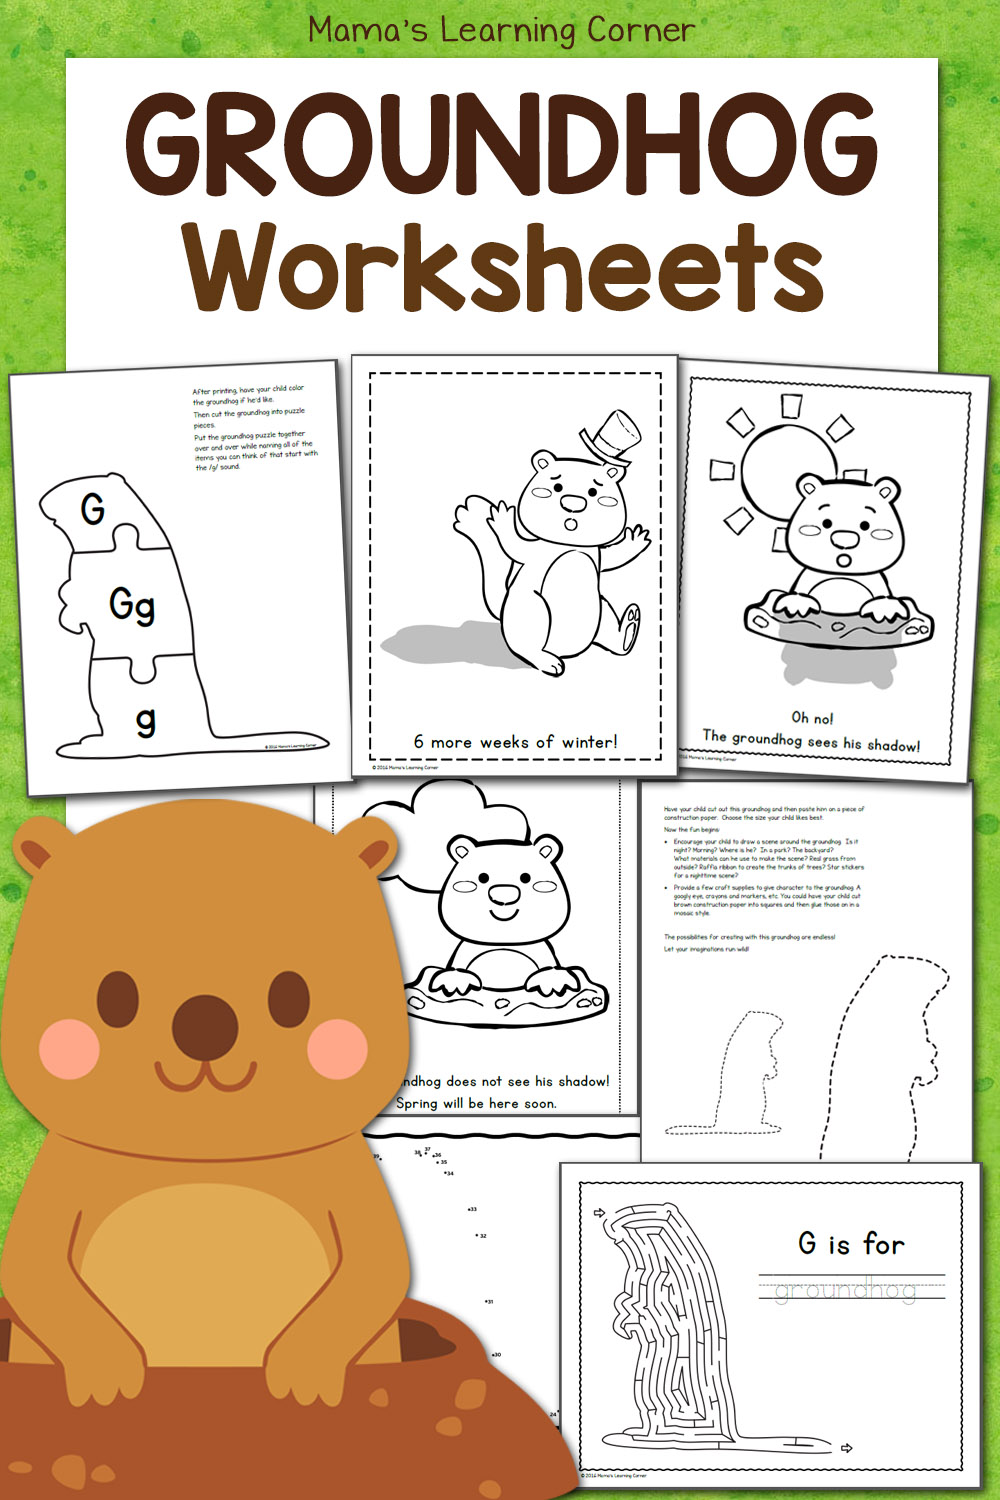 Free groundhog day worksheets